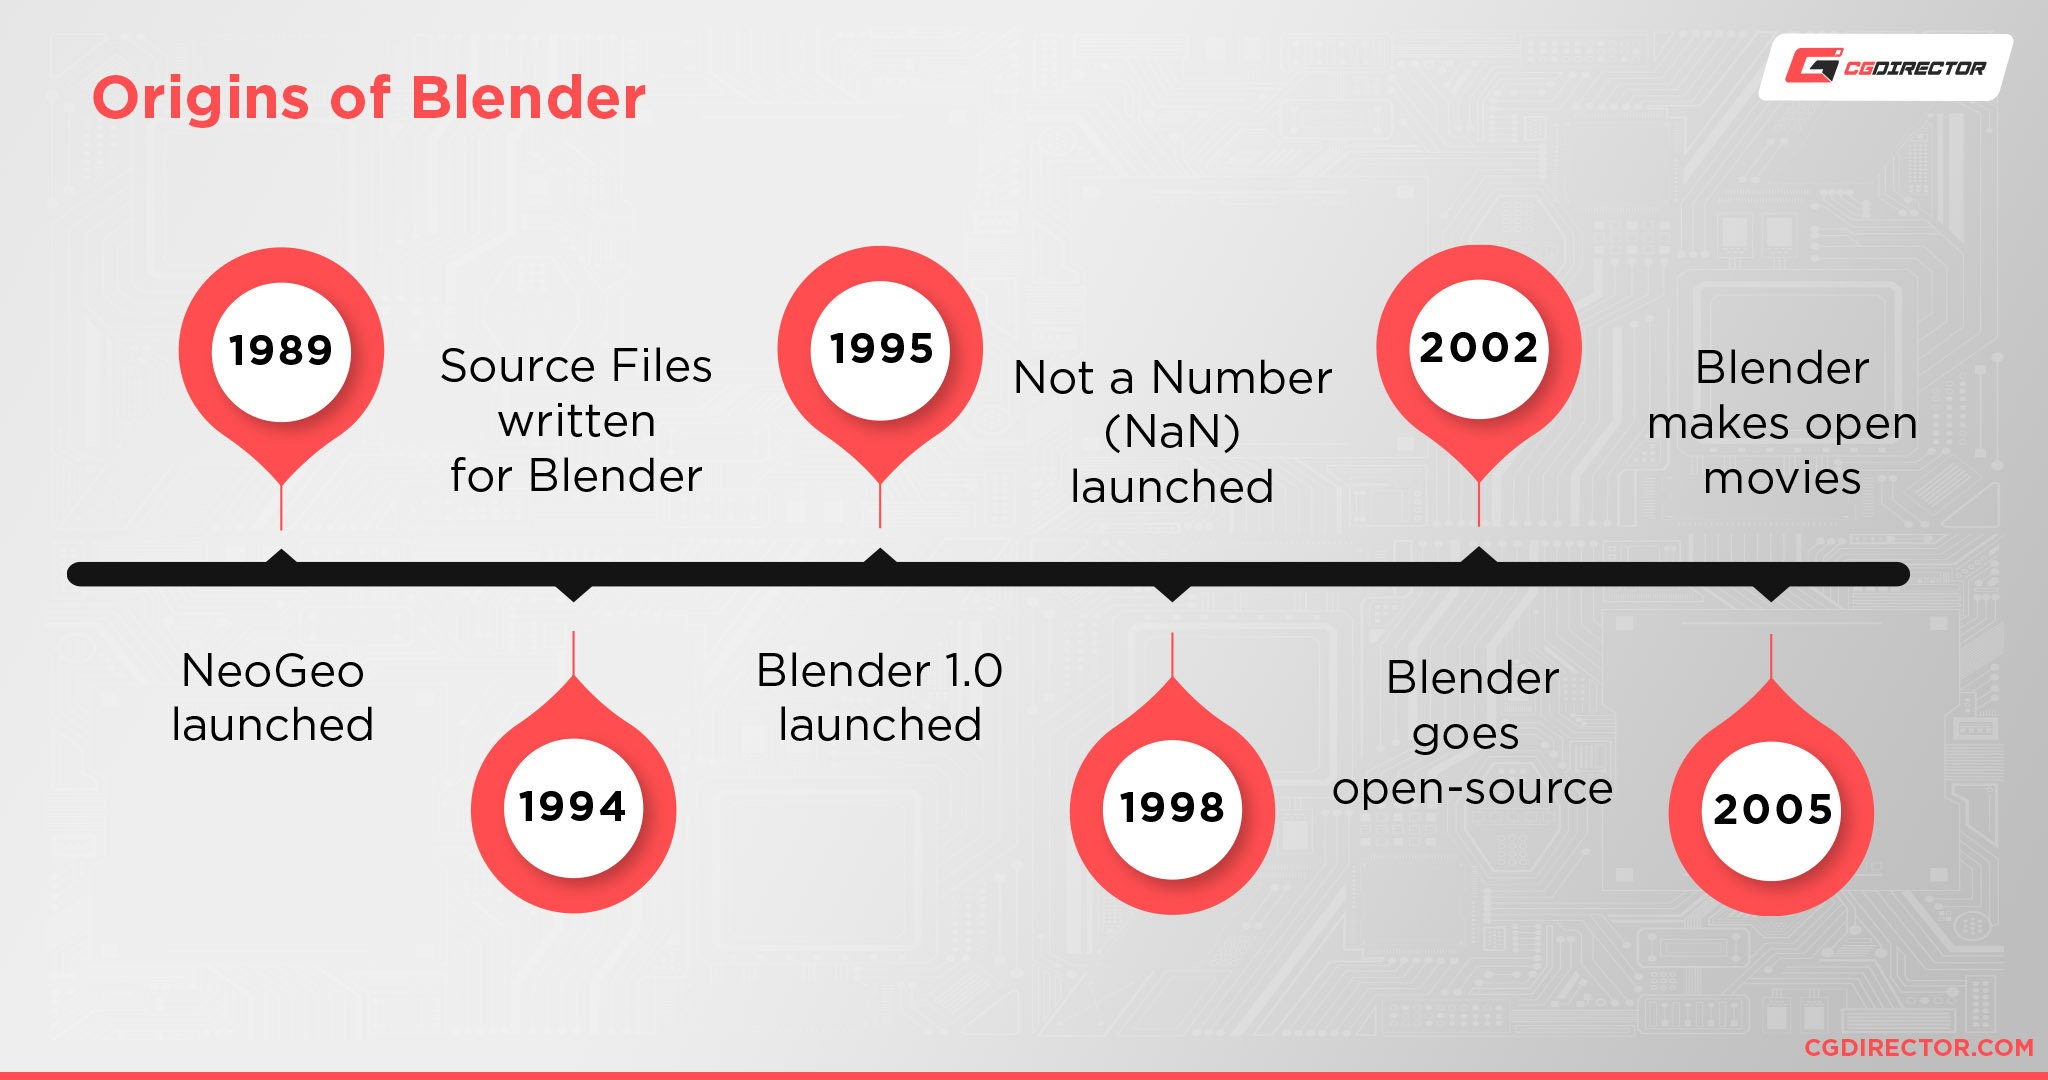 Origins of Blender